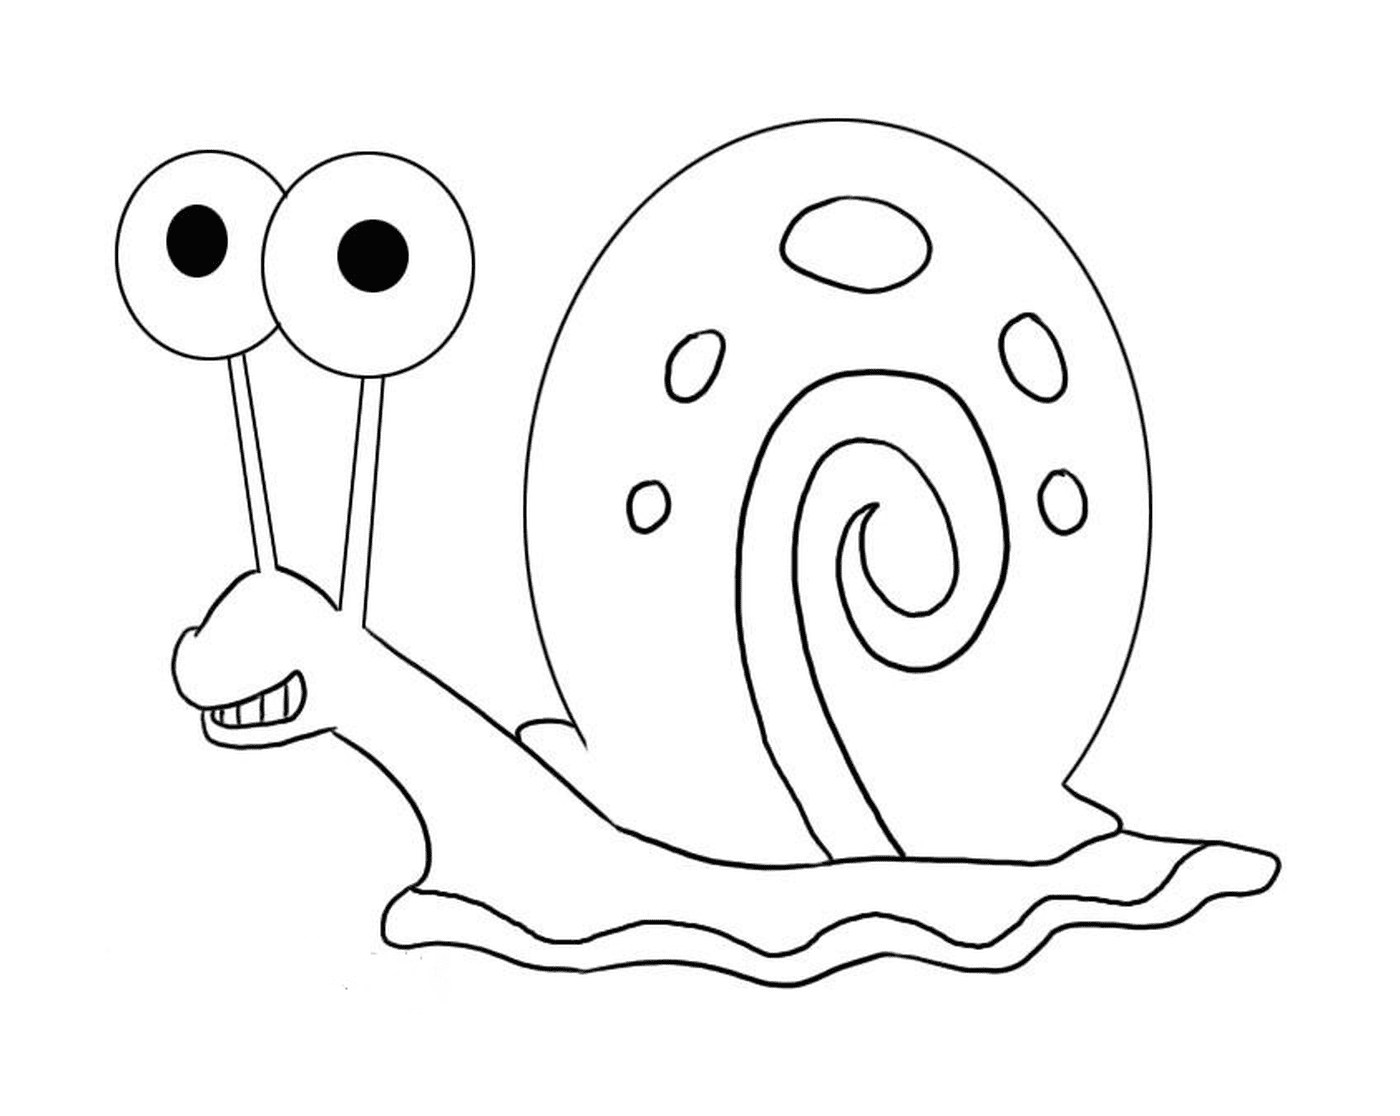  Bob's Garry Sponges for Children, a snail 